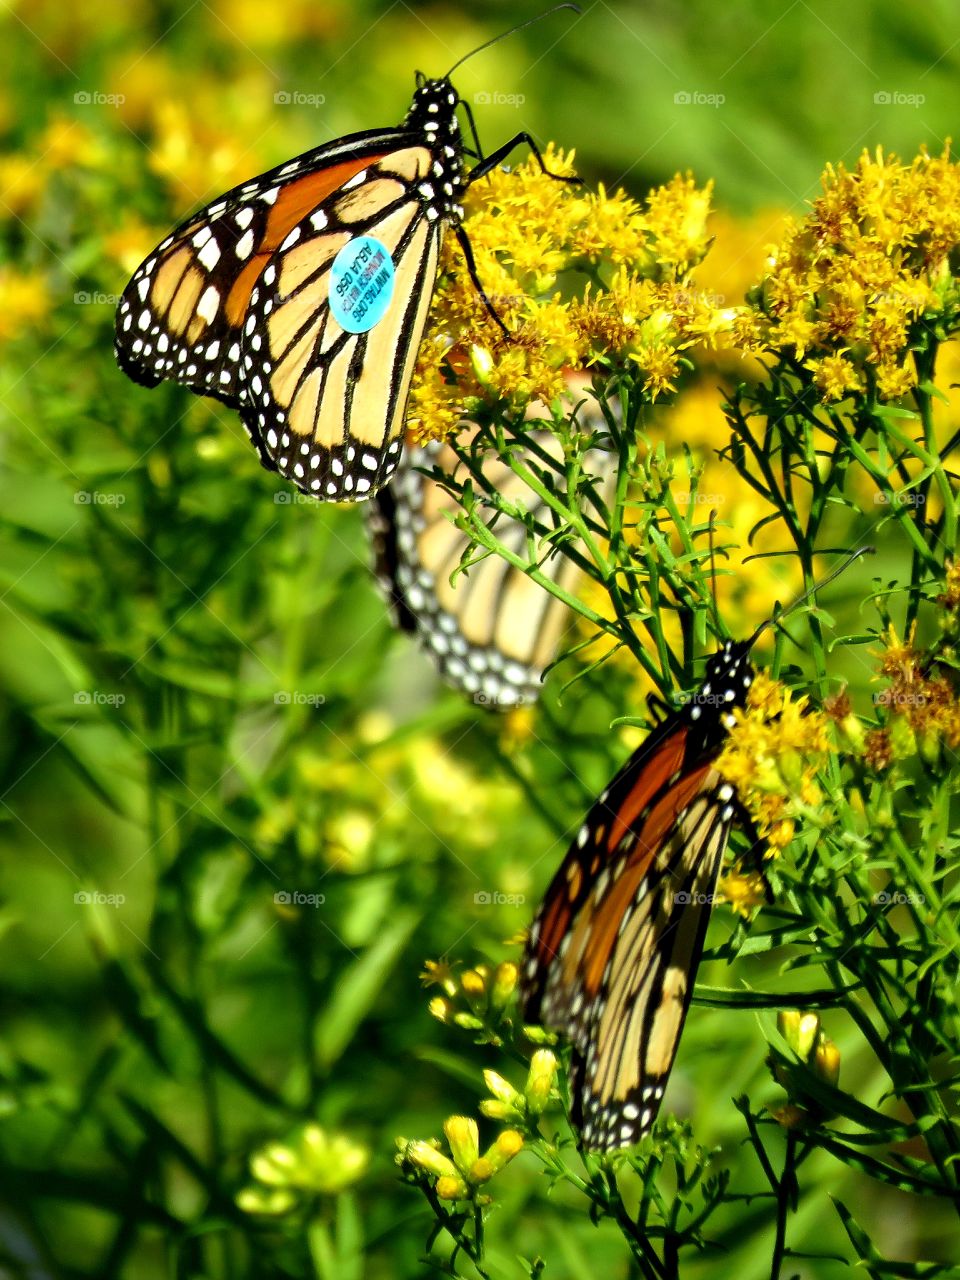 Monarchs migrating